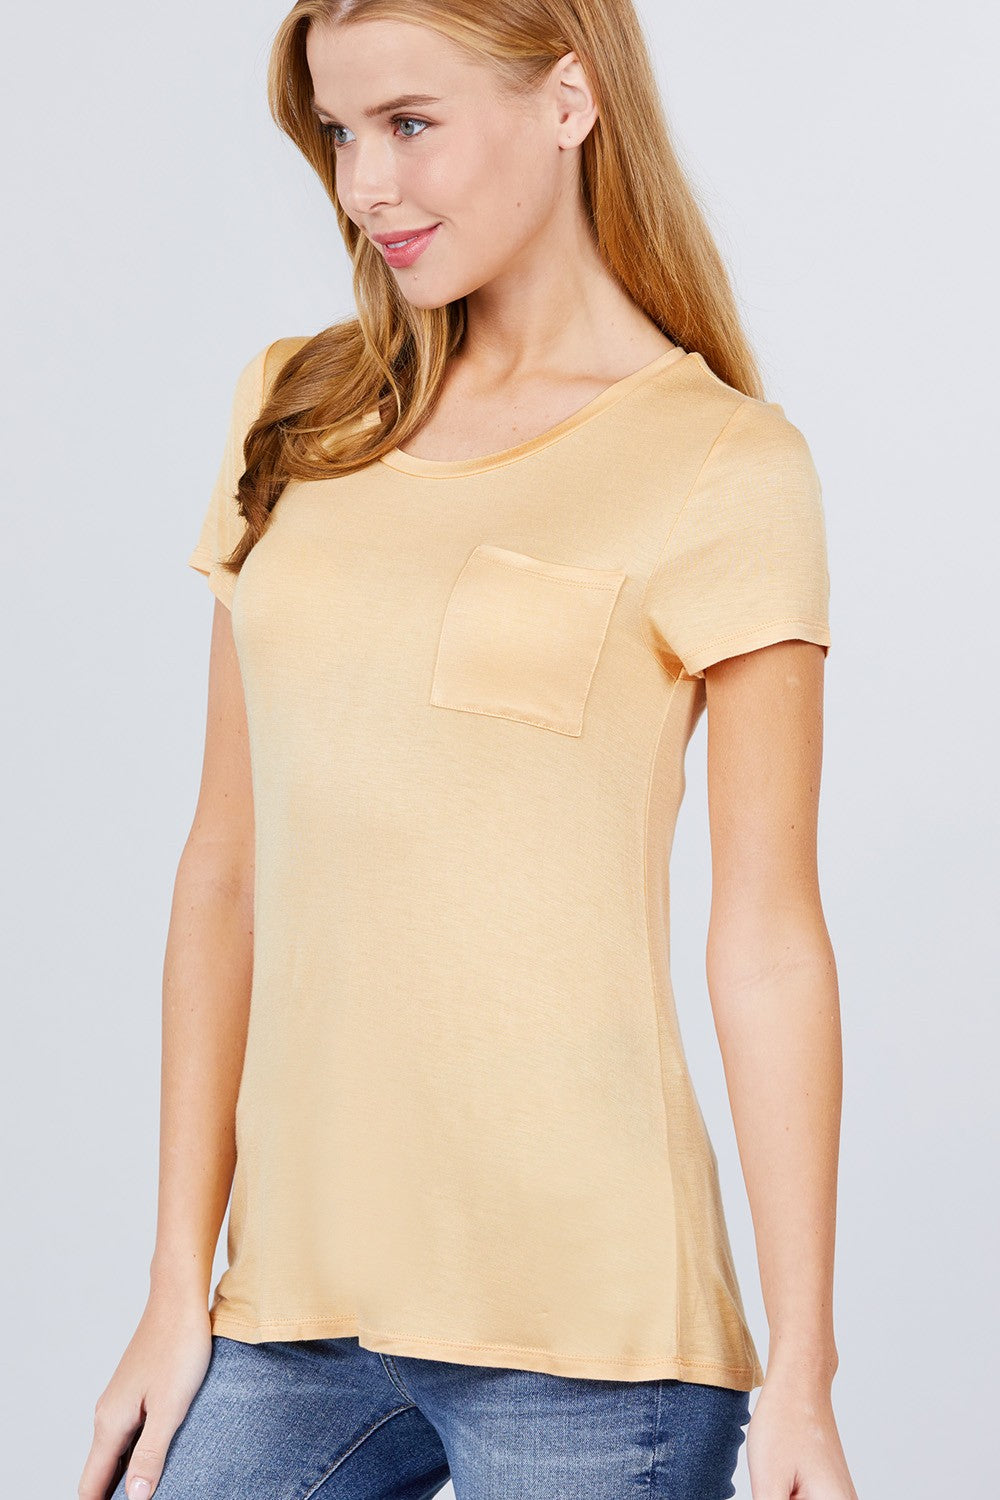 Yellow Short Sleeve Scoop Neck Shirt